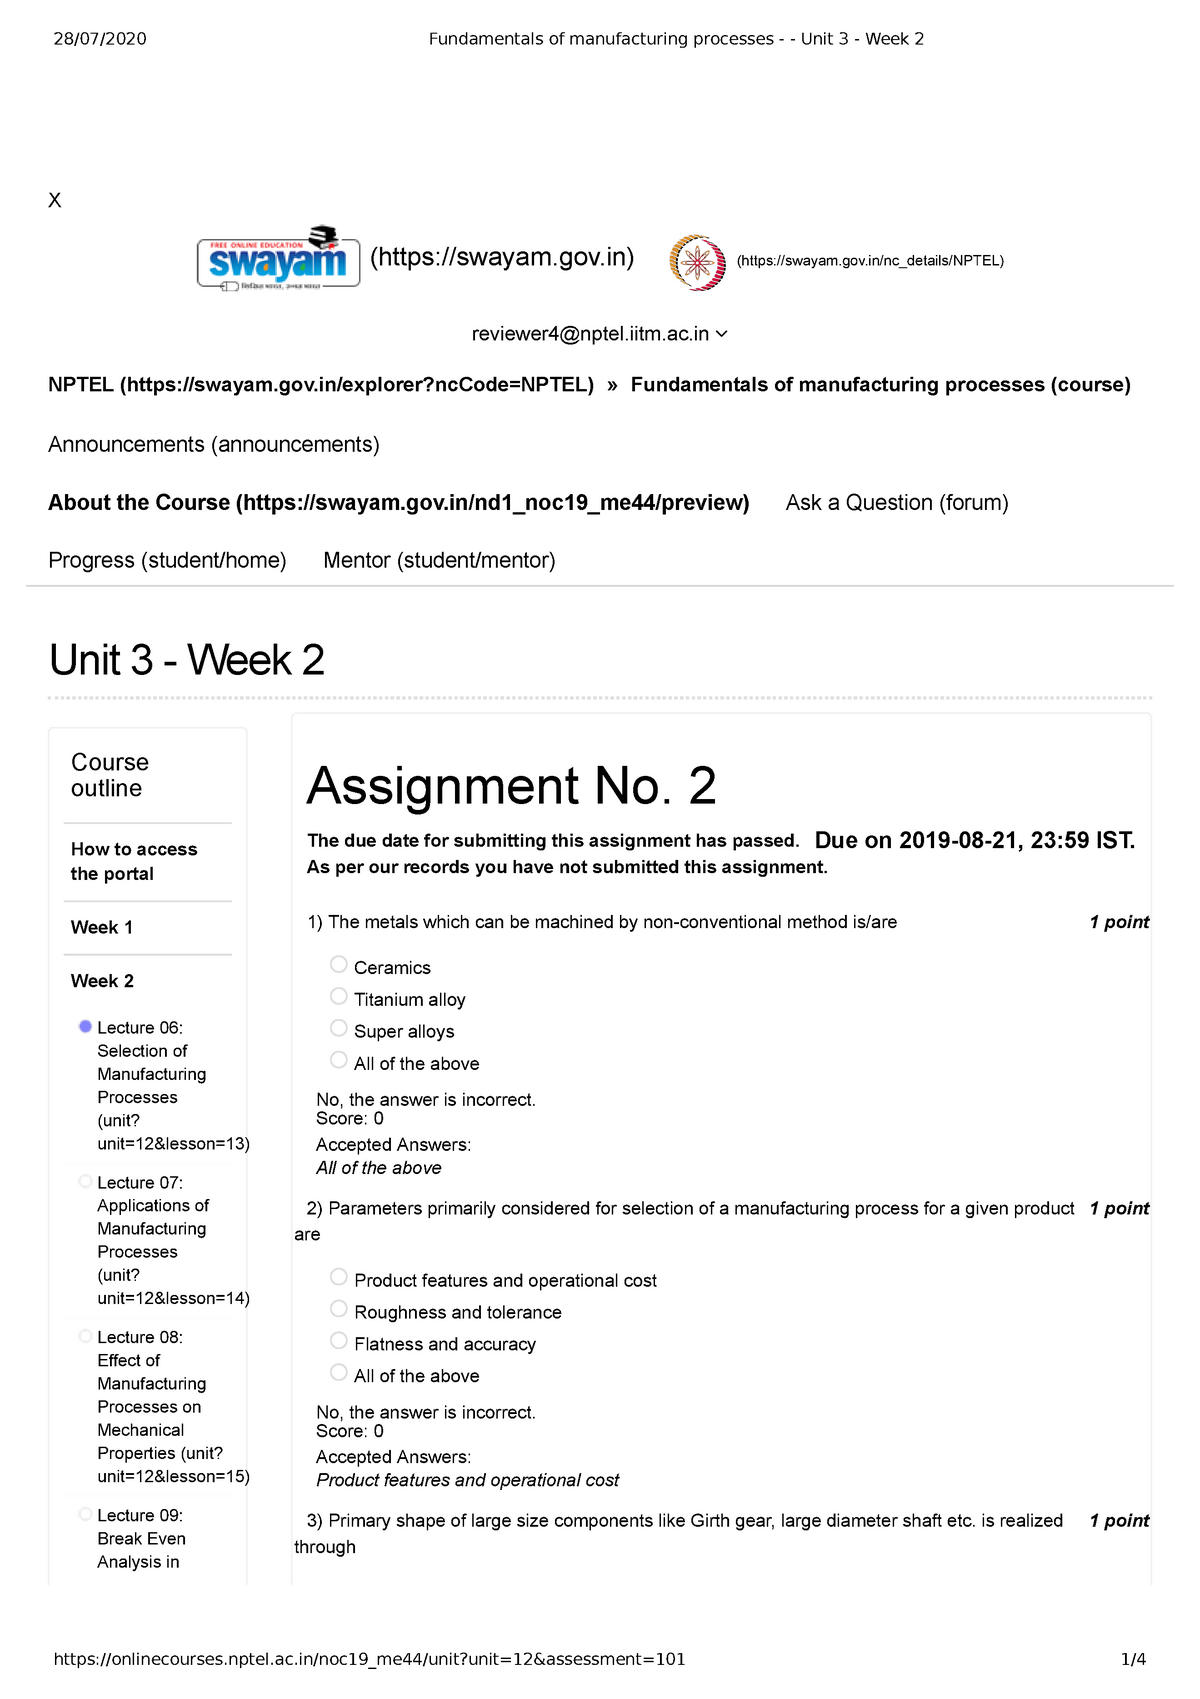 dpu assignment answers